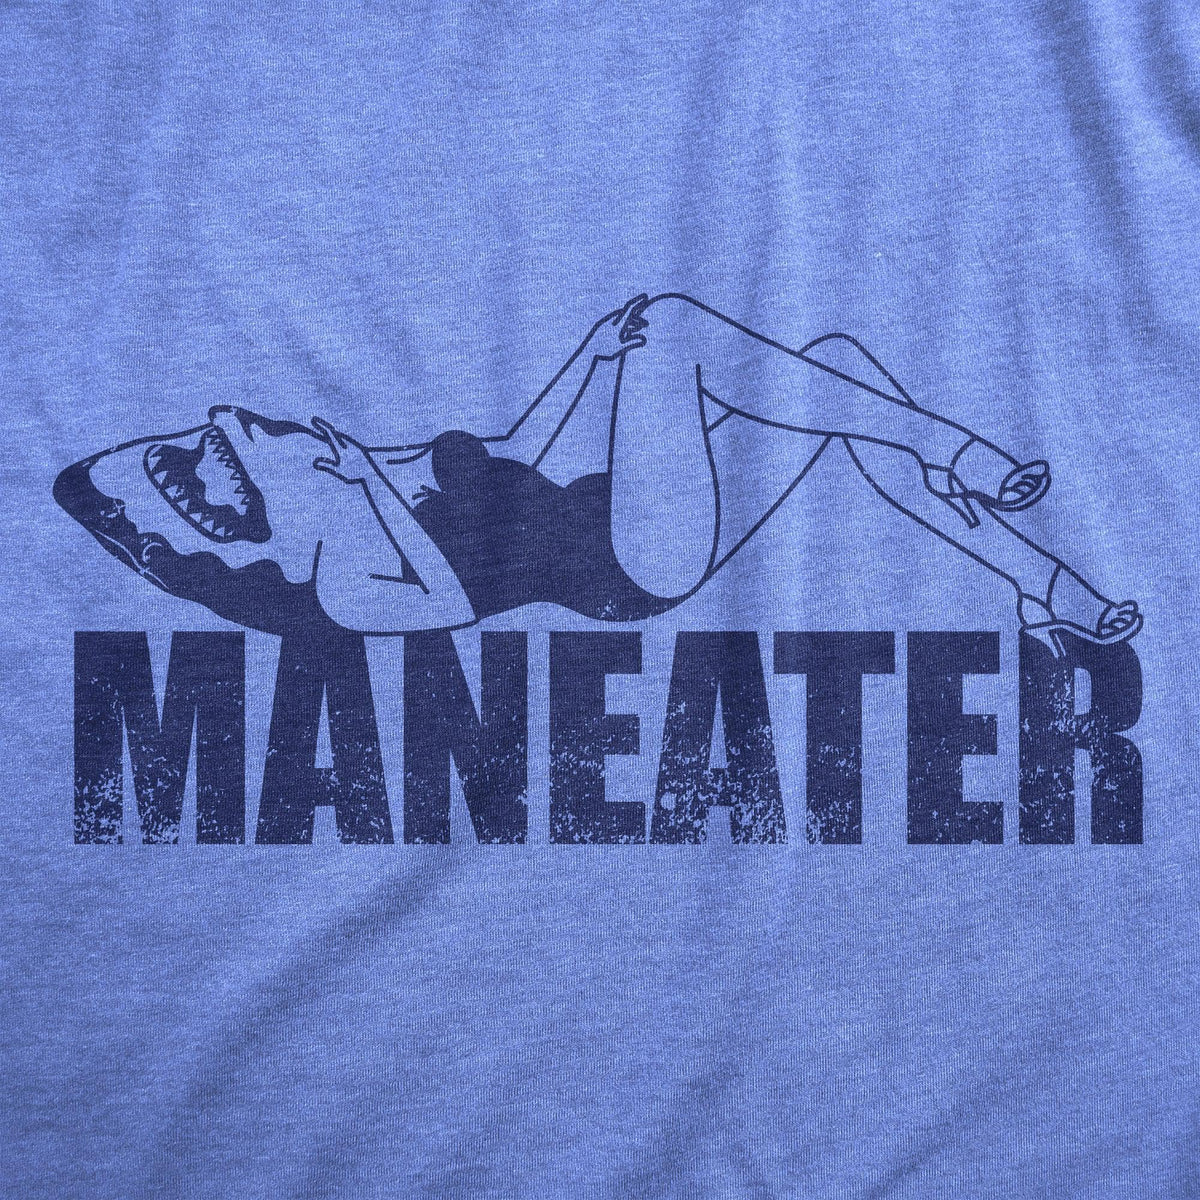 Maneater Women&#39;s Tshirt  -  Crazy Dog T-Shirts